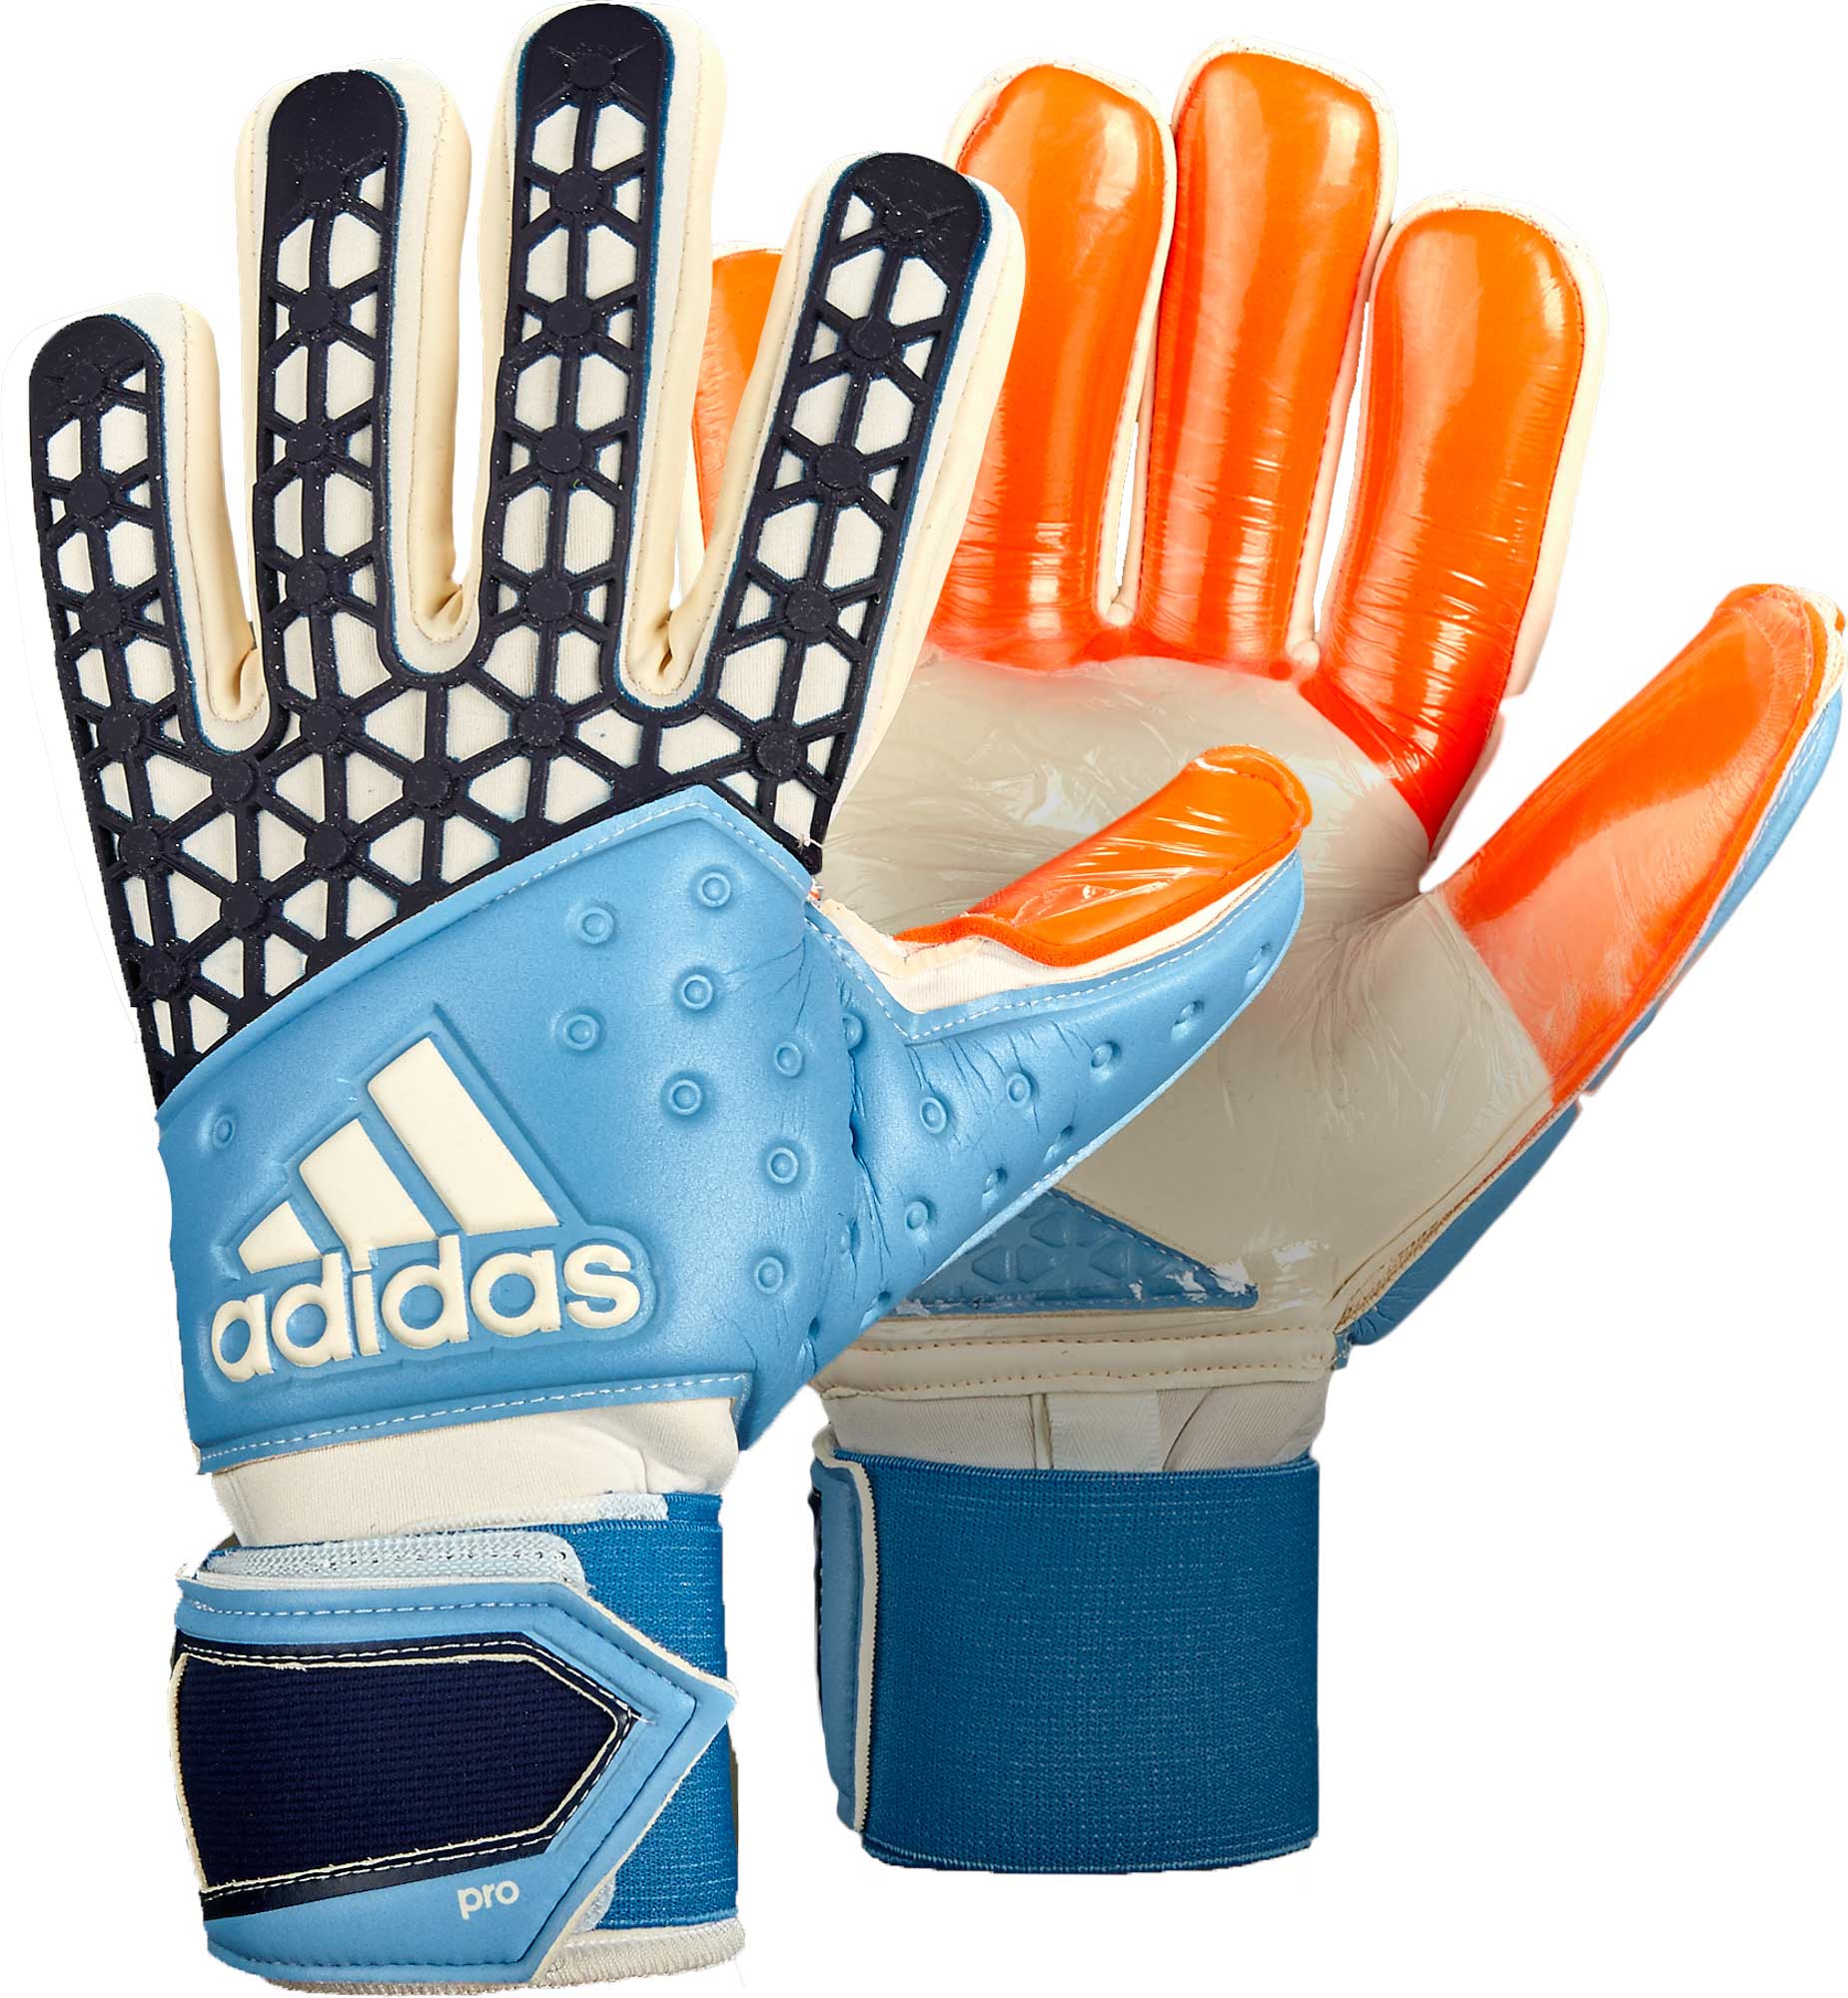 adidas ace zones goalkeeper gloves